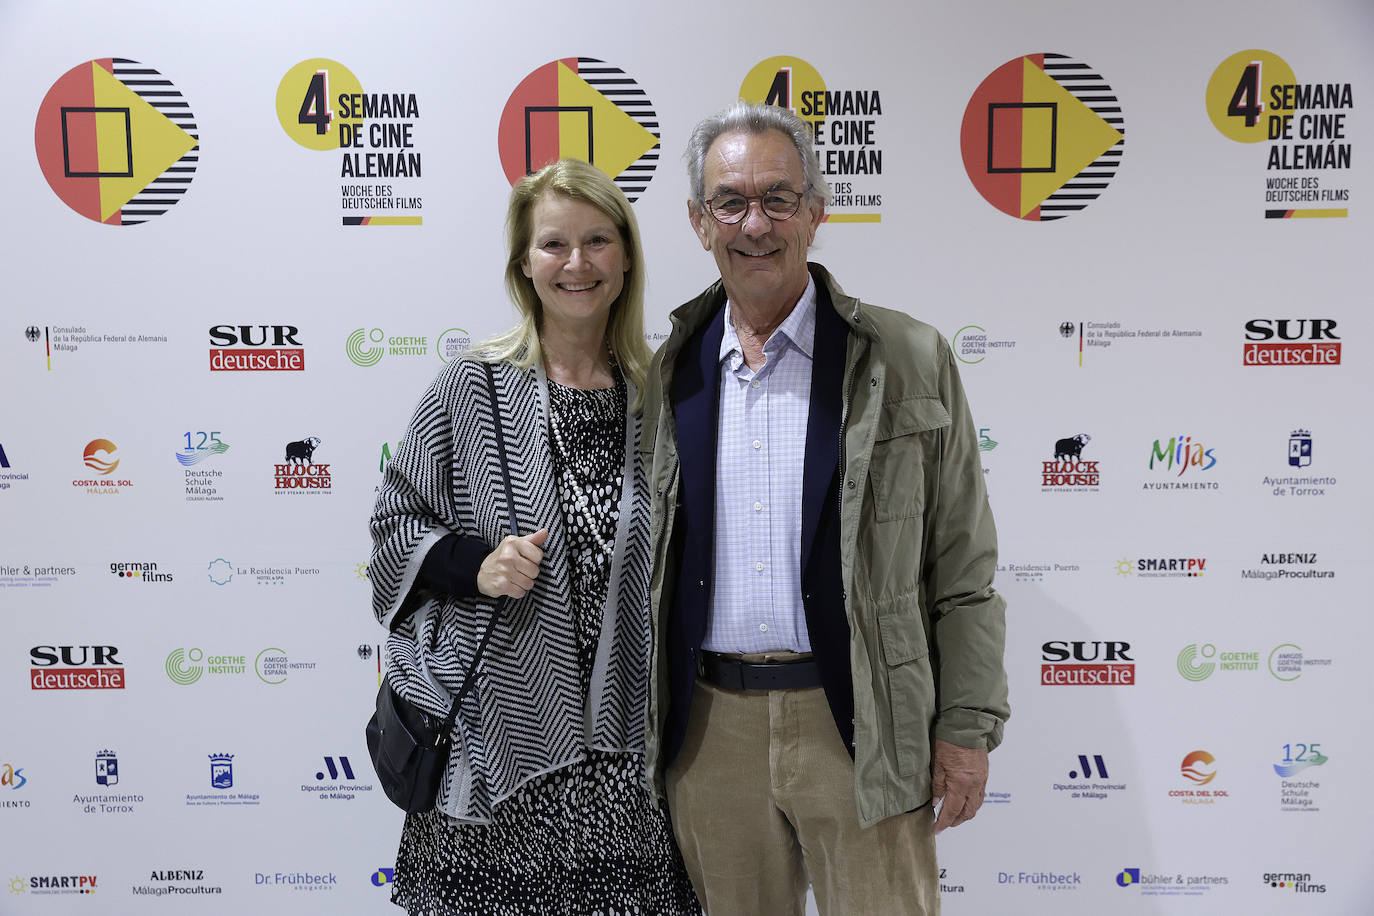 German film week opens in Malaga - in pictures